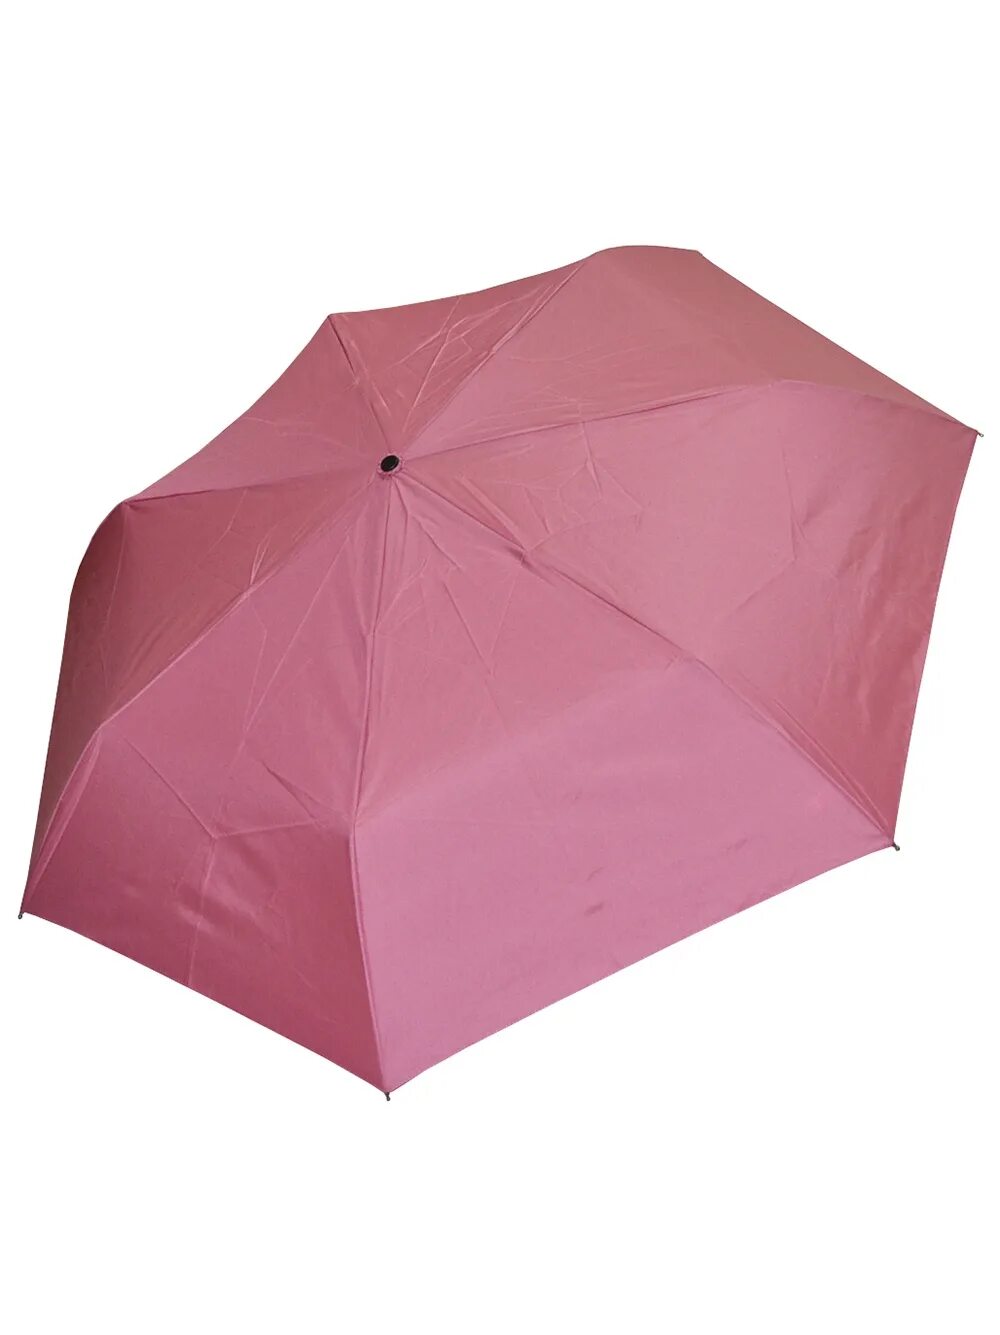 Купить зонт на озон. Зонт ame Yoke ok-55p. Бандерас умбрелла зонт. Зонт фуксия. Зонт цвет фуксия.